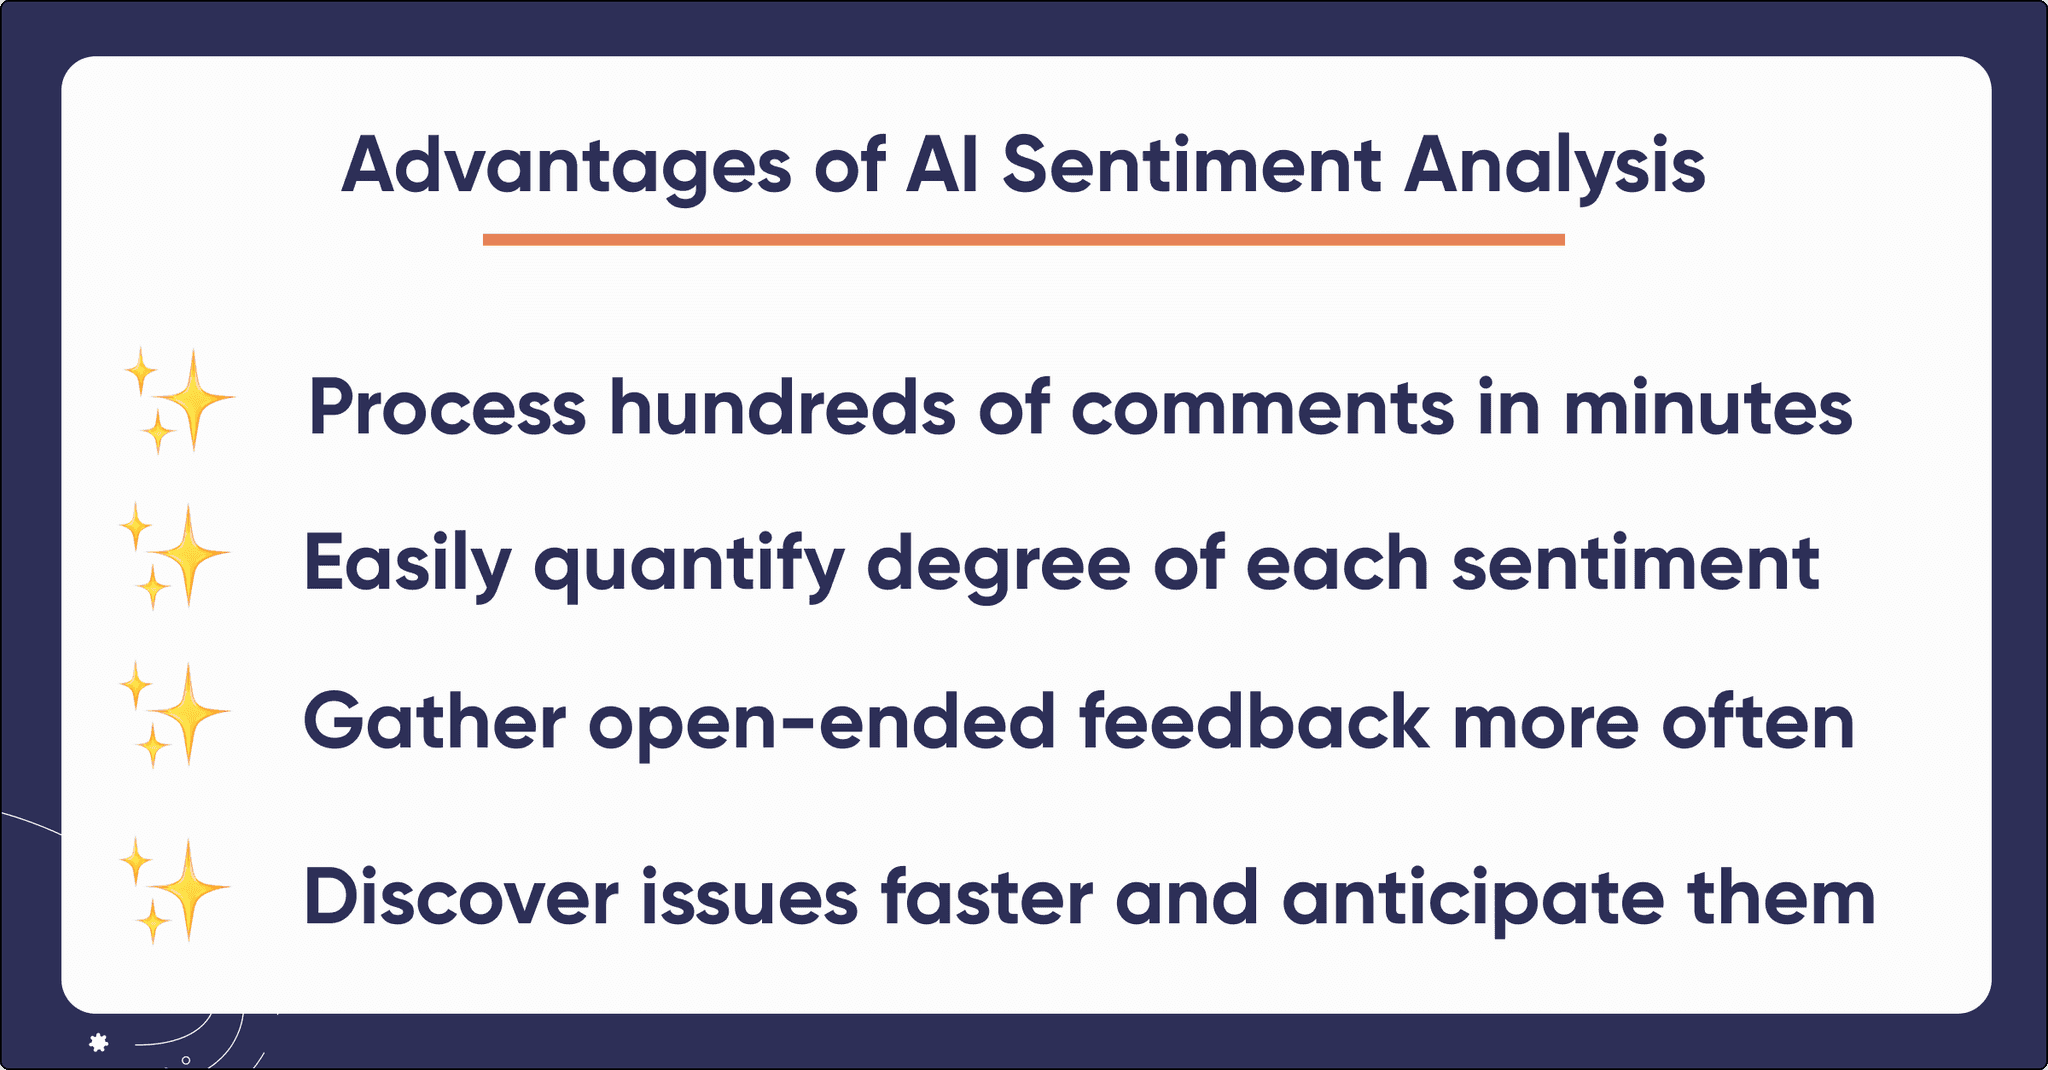 Advantages of AI sentiment analysis